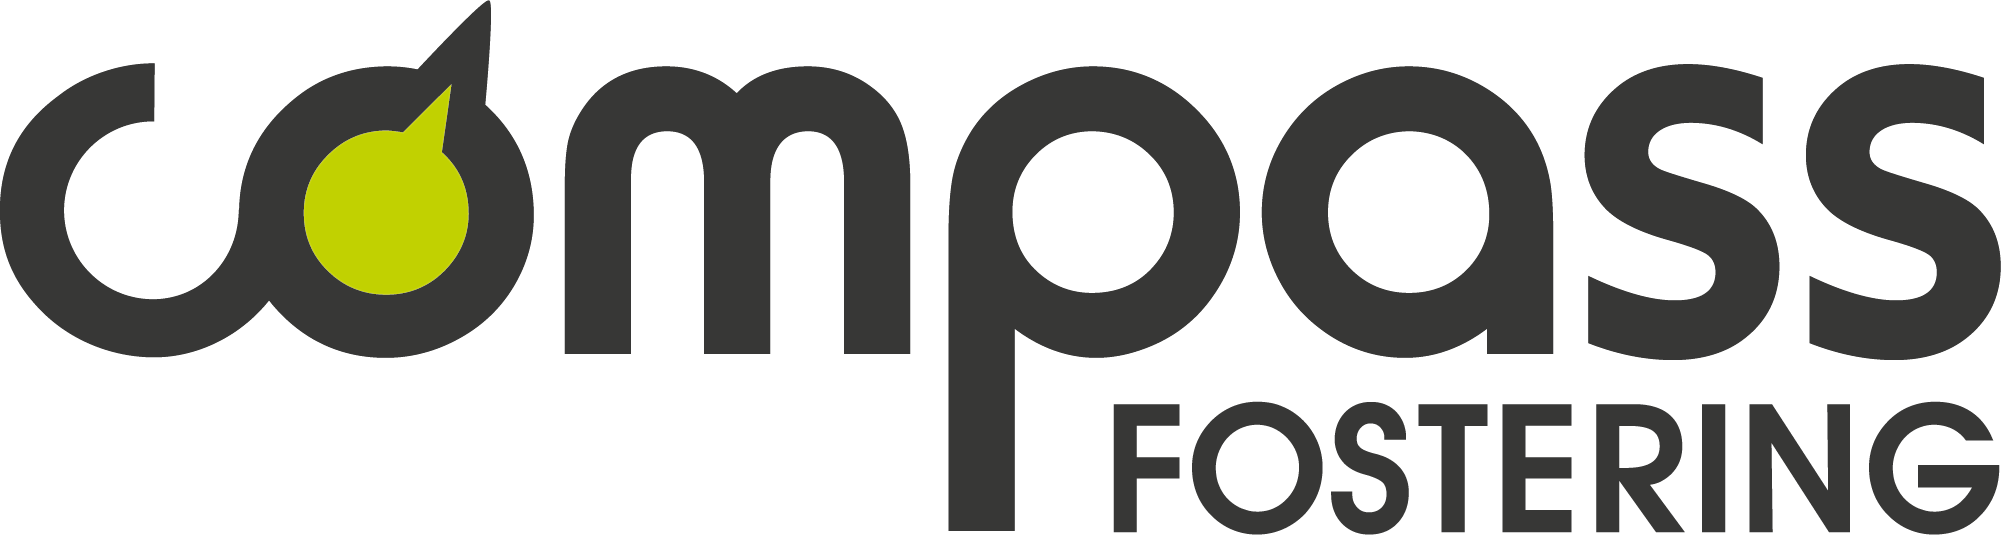 Compass Fostering Logo